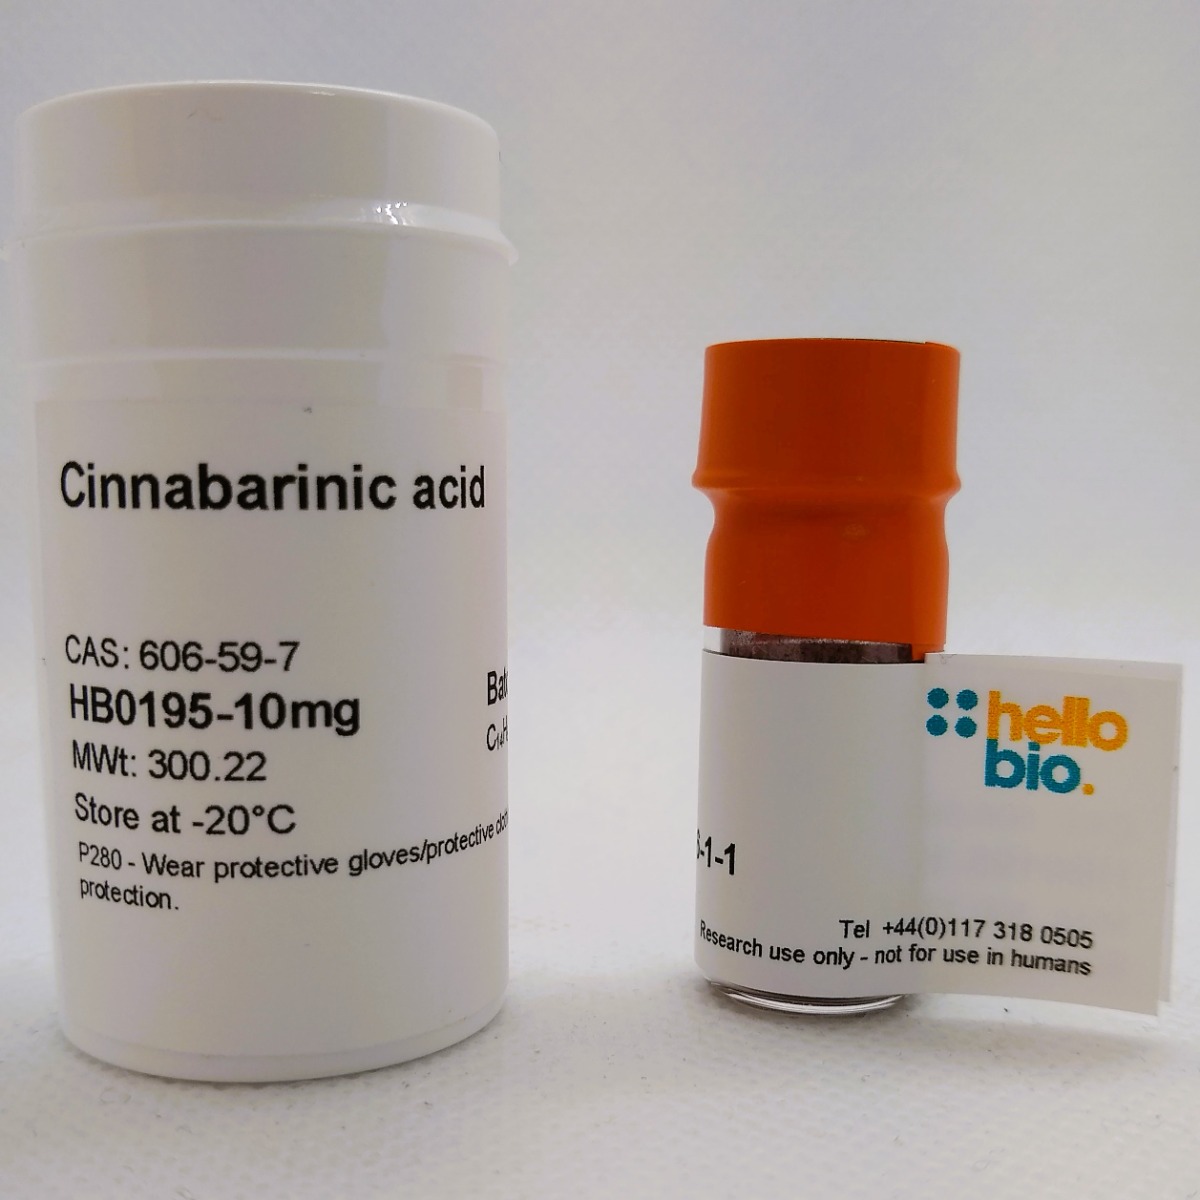 Cinnabarinic acid product vial image | Hello Bio